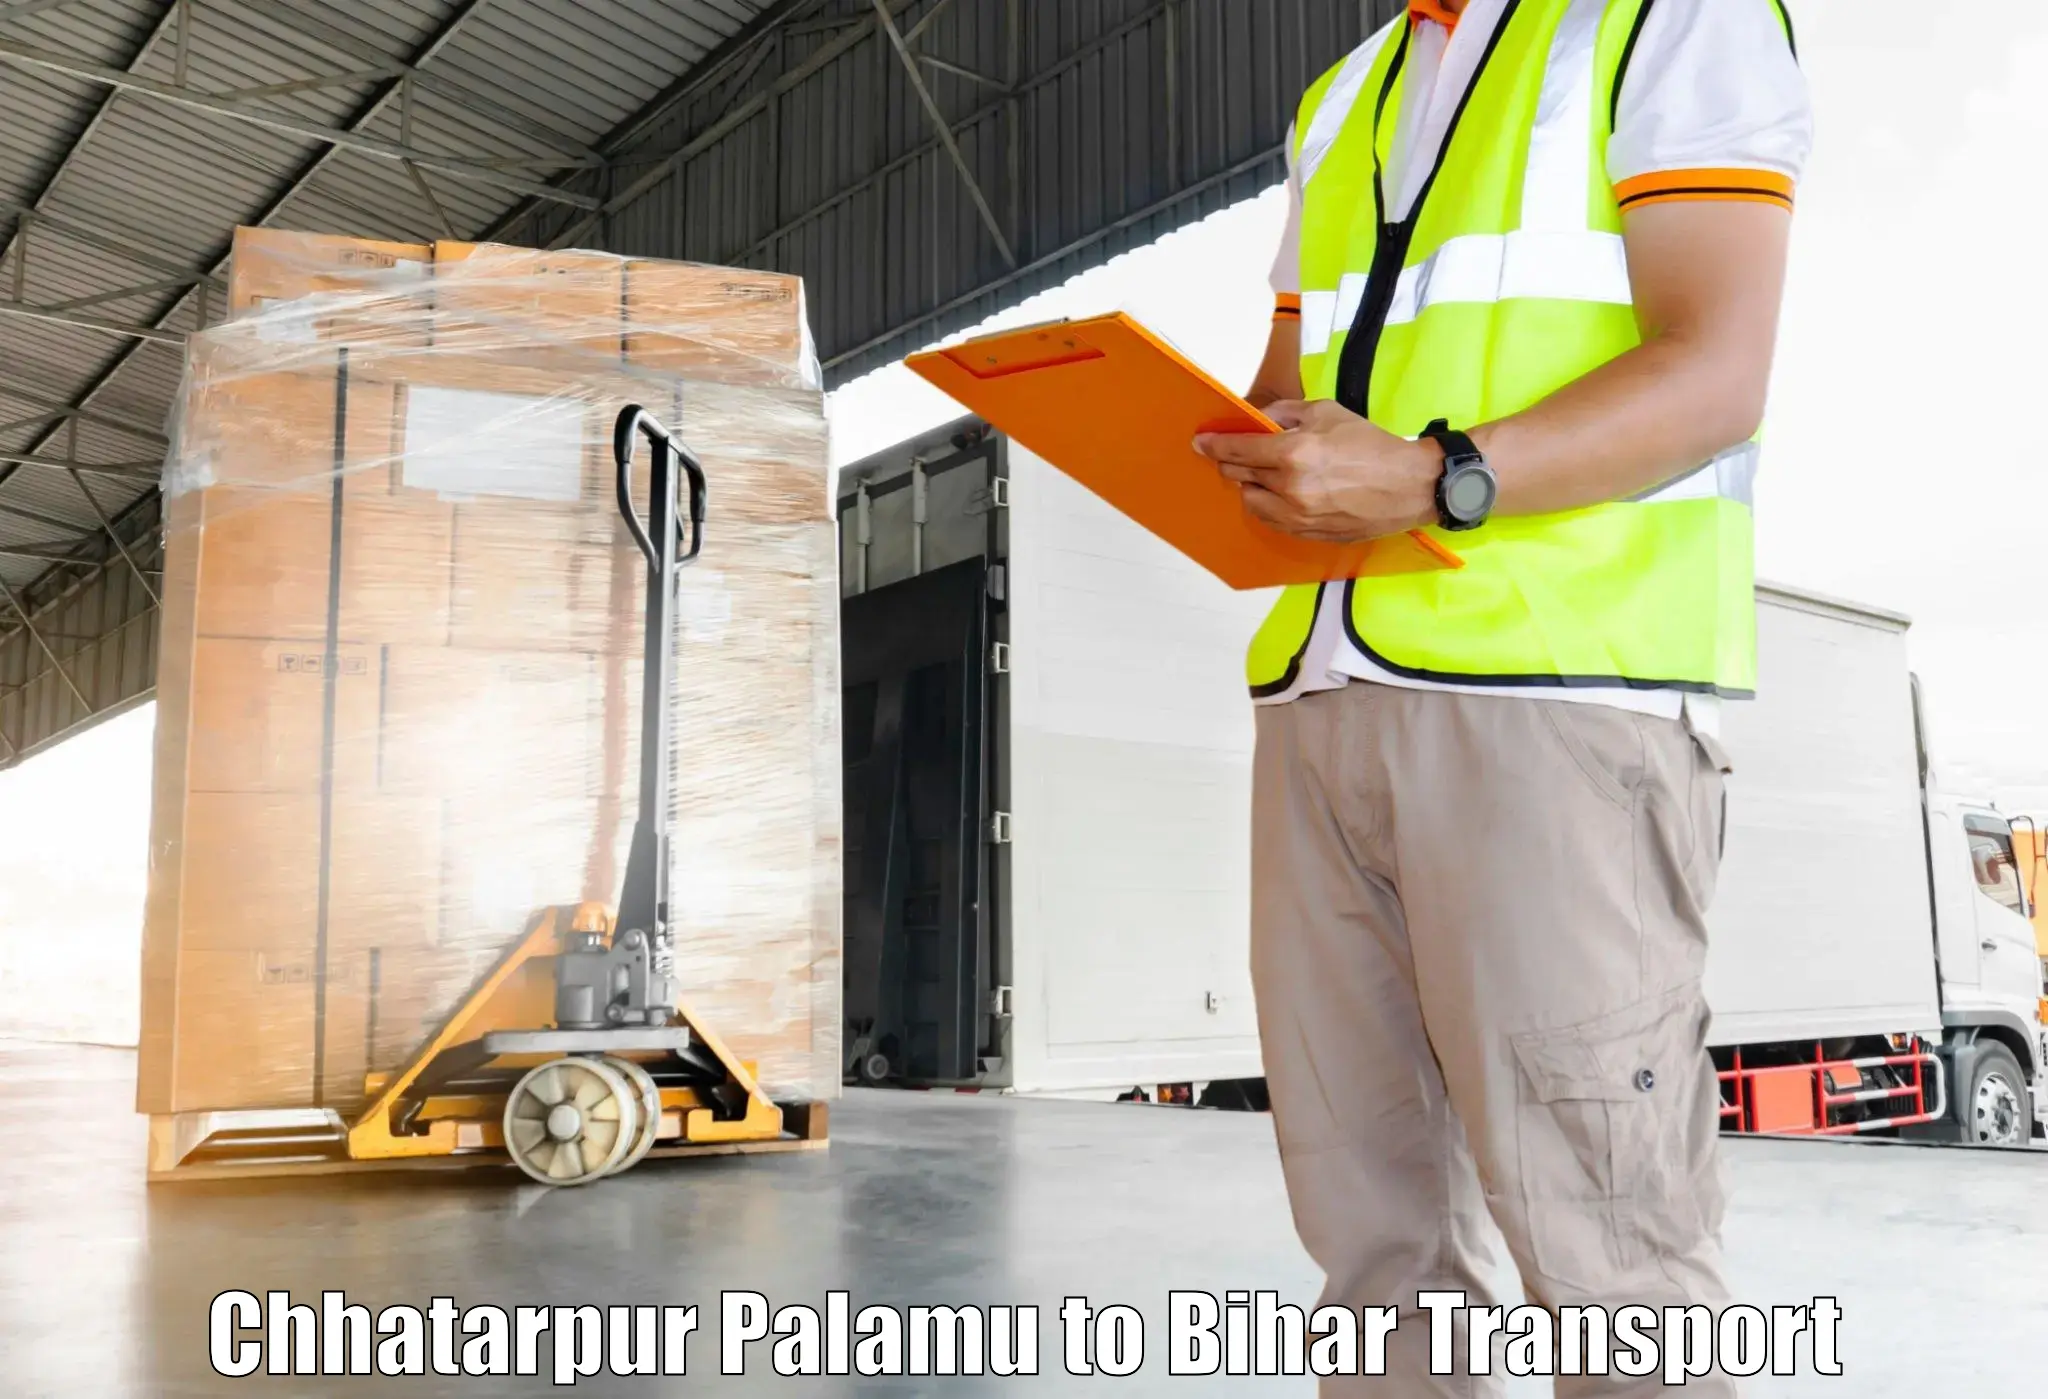 Part load transport service in India in Chhatarpur Palamu to Barachati